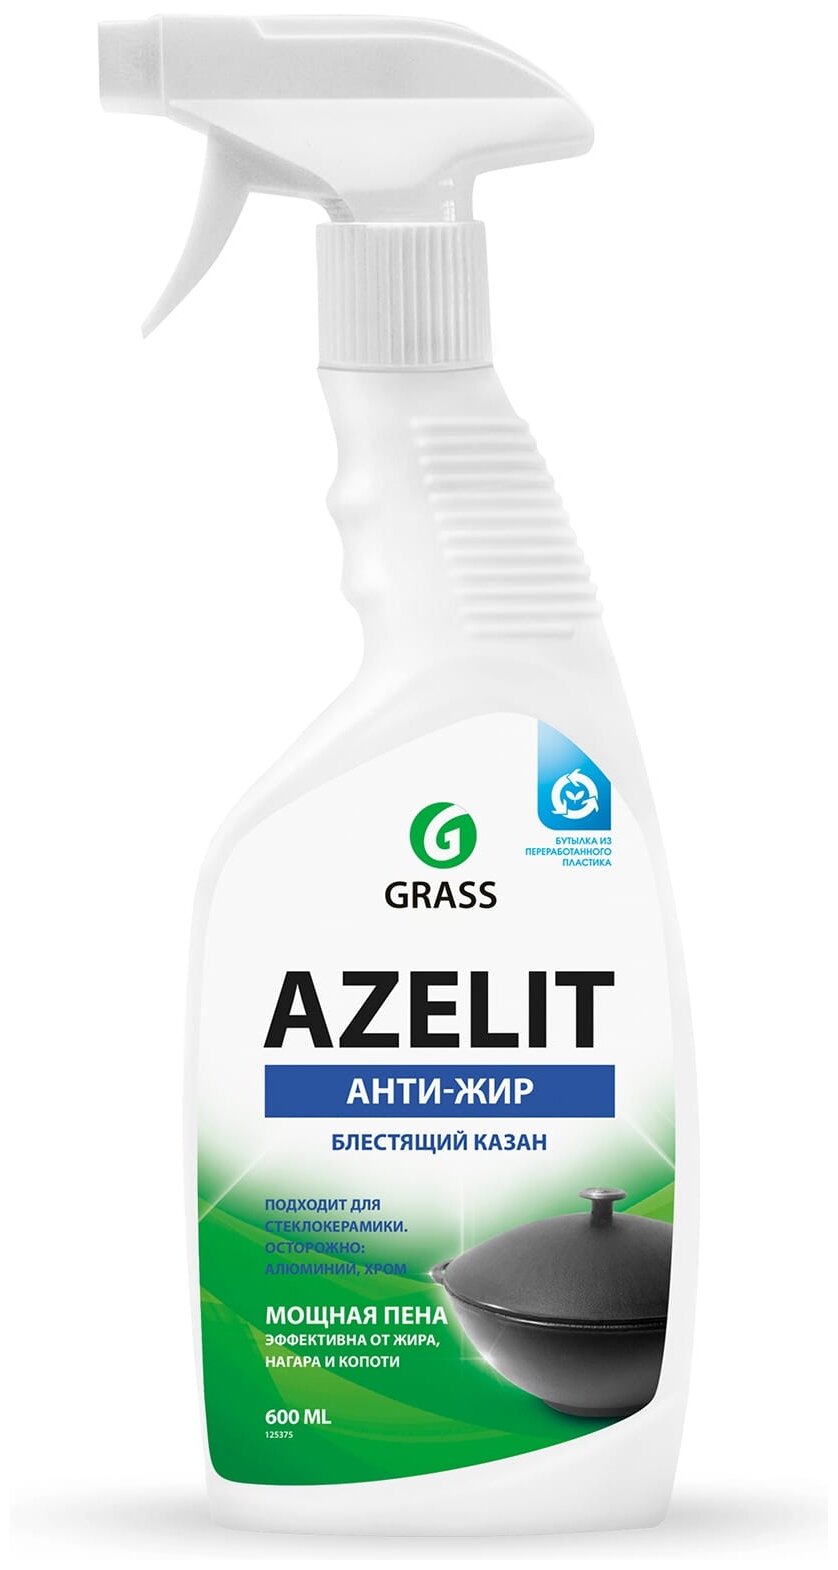 Чистящее средство для кухни Grass «Azelit» казан антижир Grass, 600 мл .